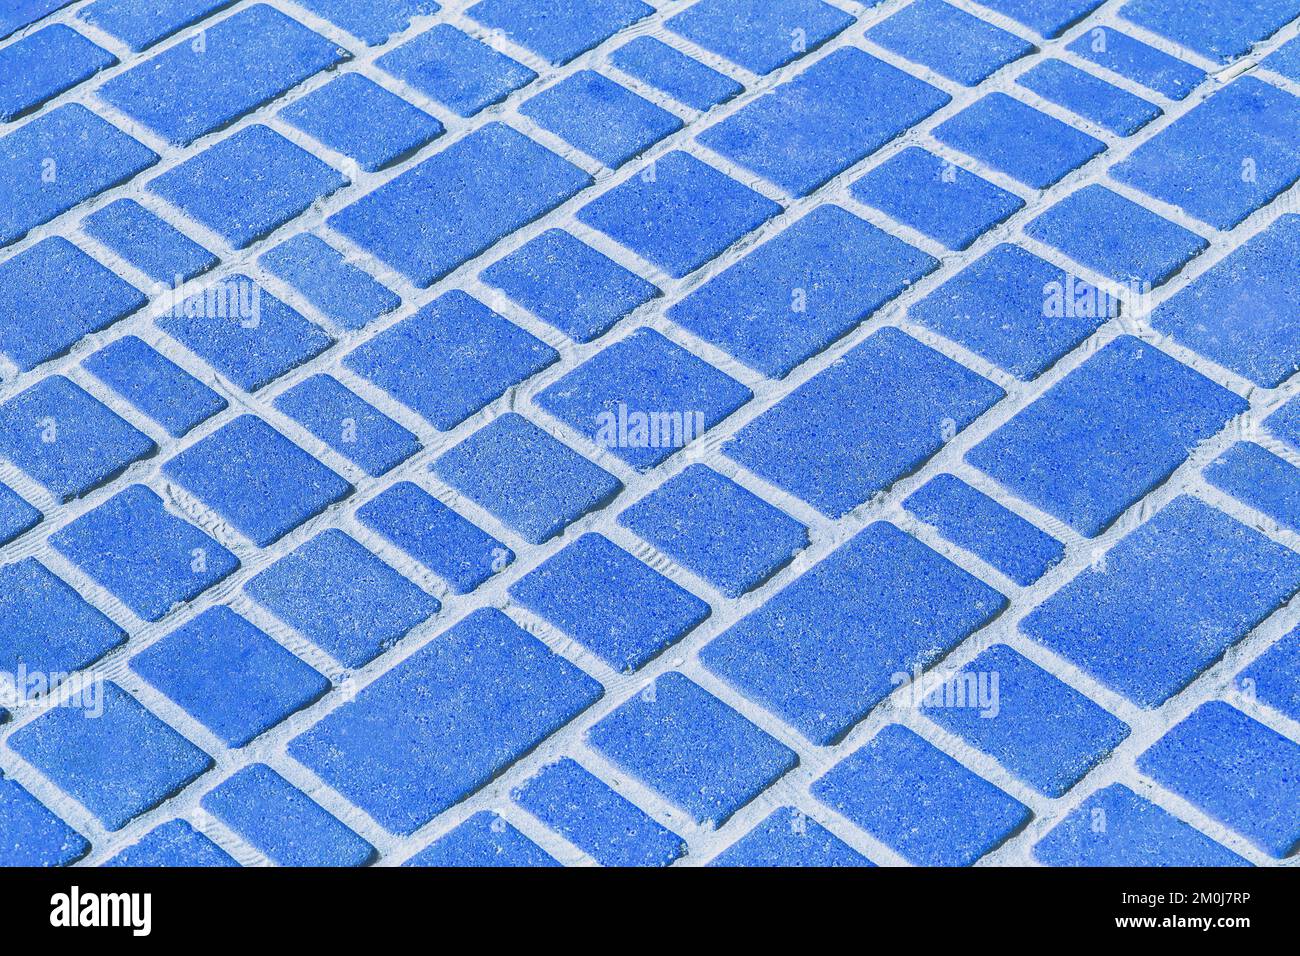 Blue stone paving slabs floor tile urban texture pattern street road background. Stock Photo